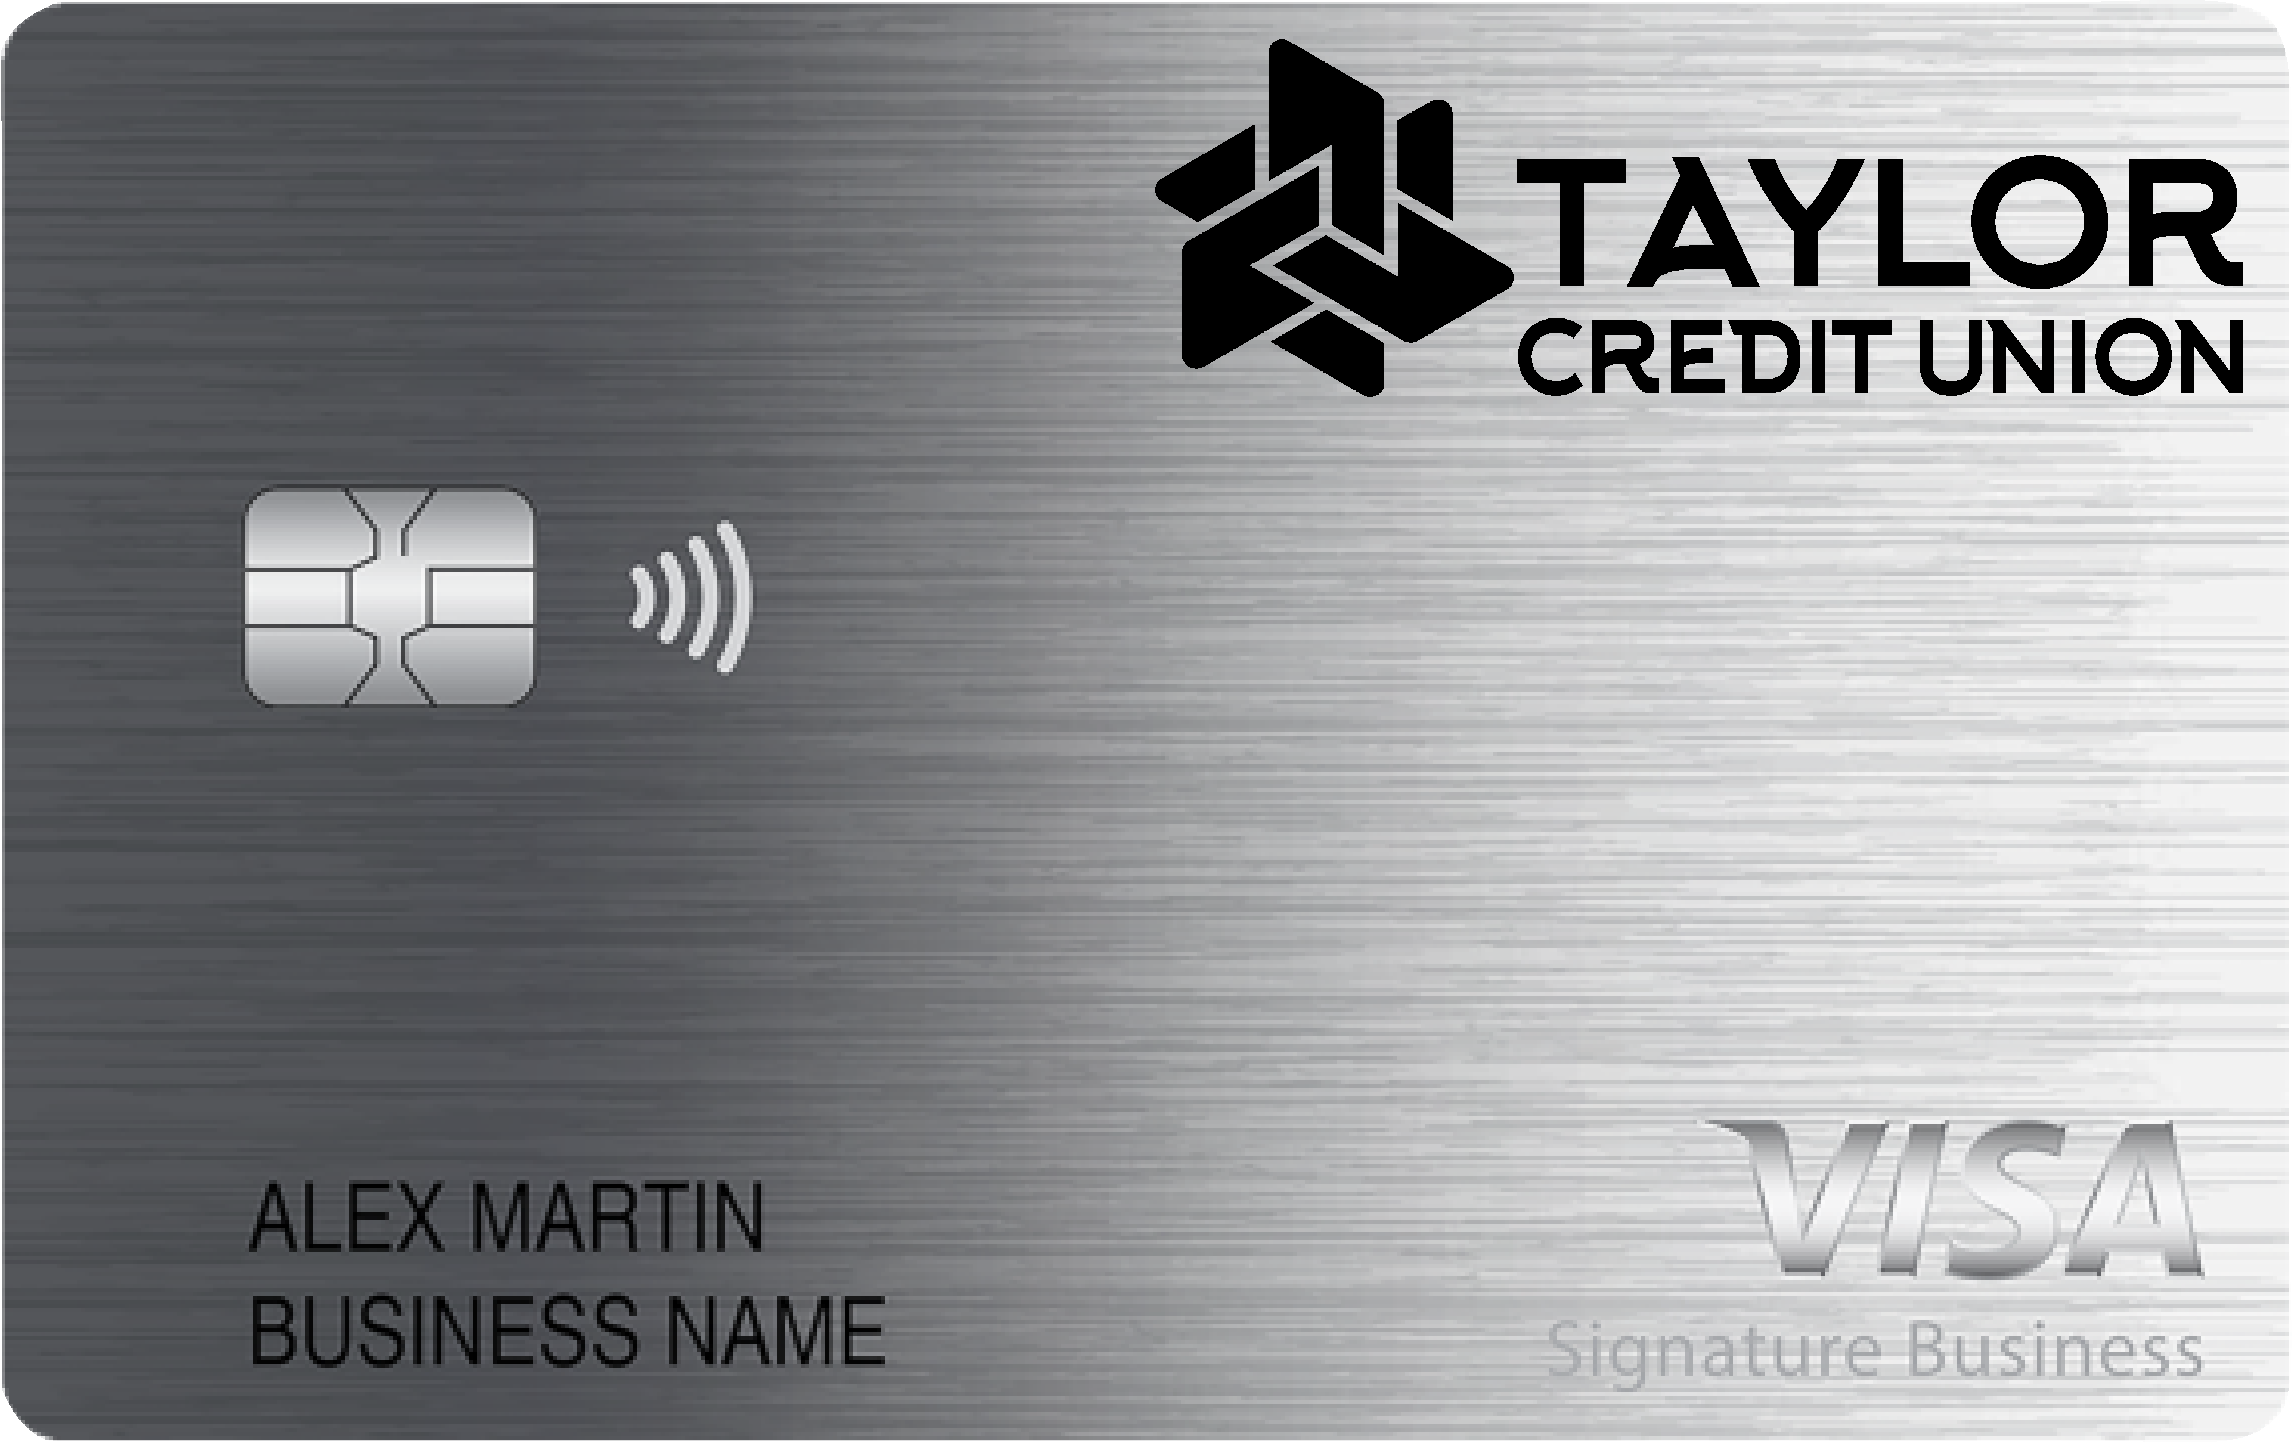 Taylor Credit Union Smart Business Rewards Card